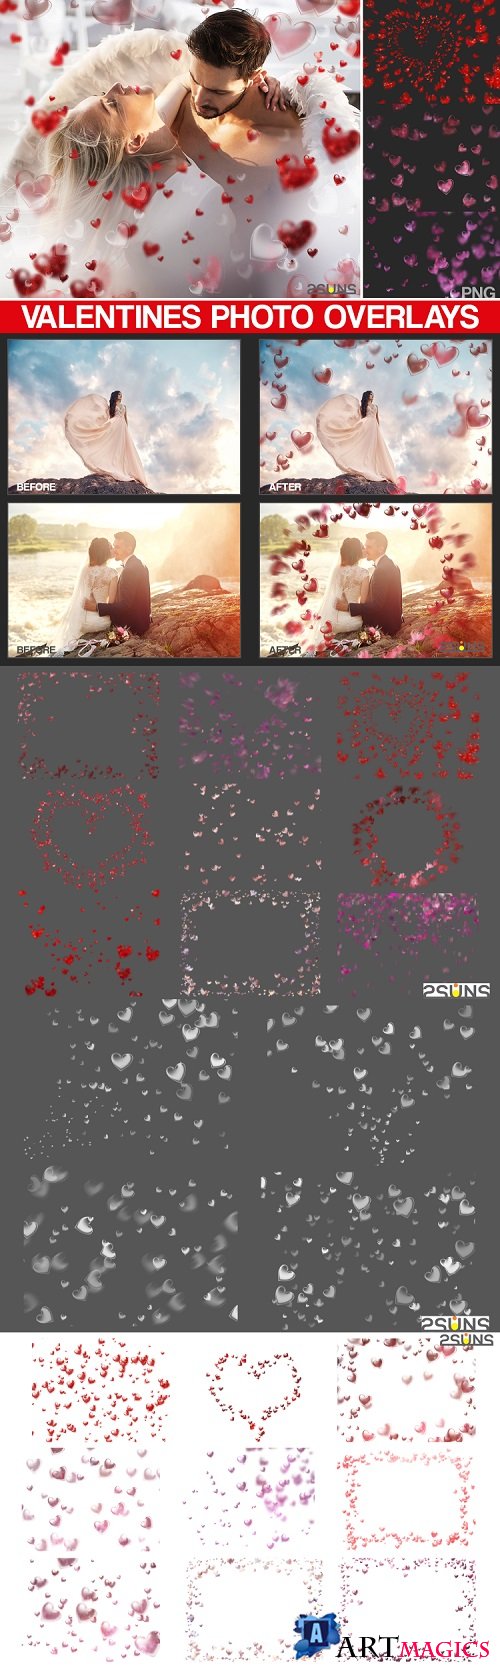 Valentine's photo overlays, photoshop, blowing heart, kiss - 447645